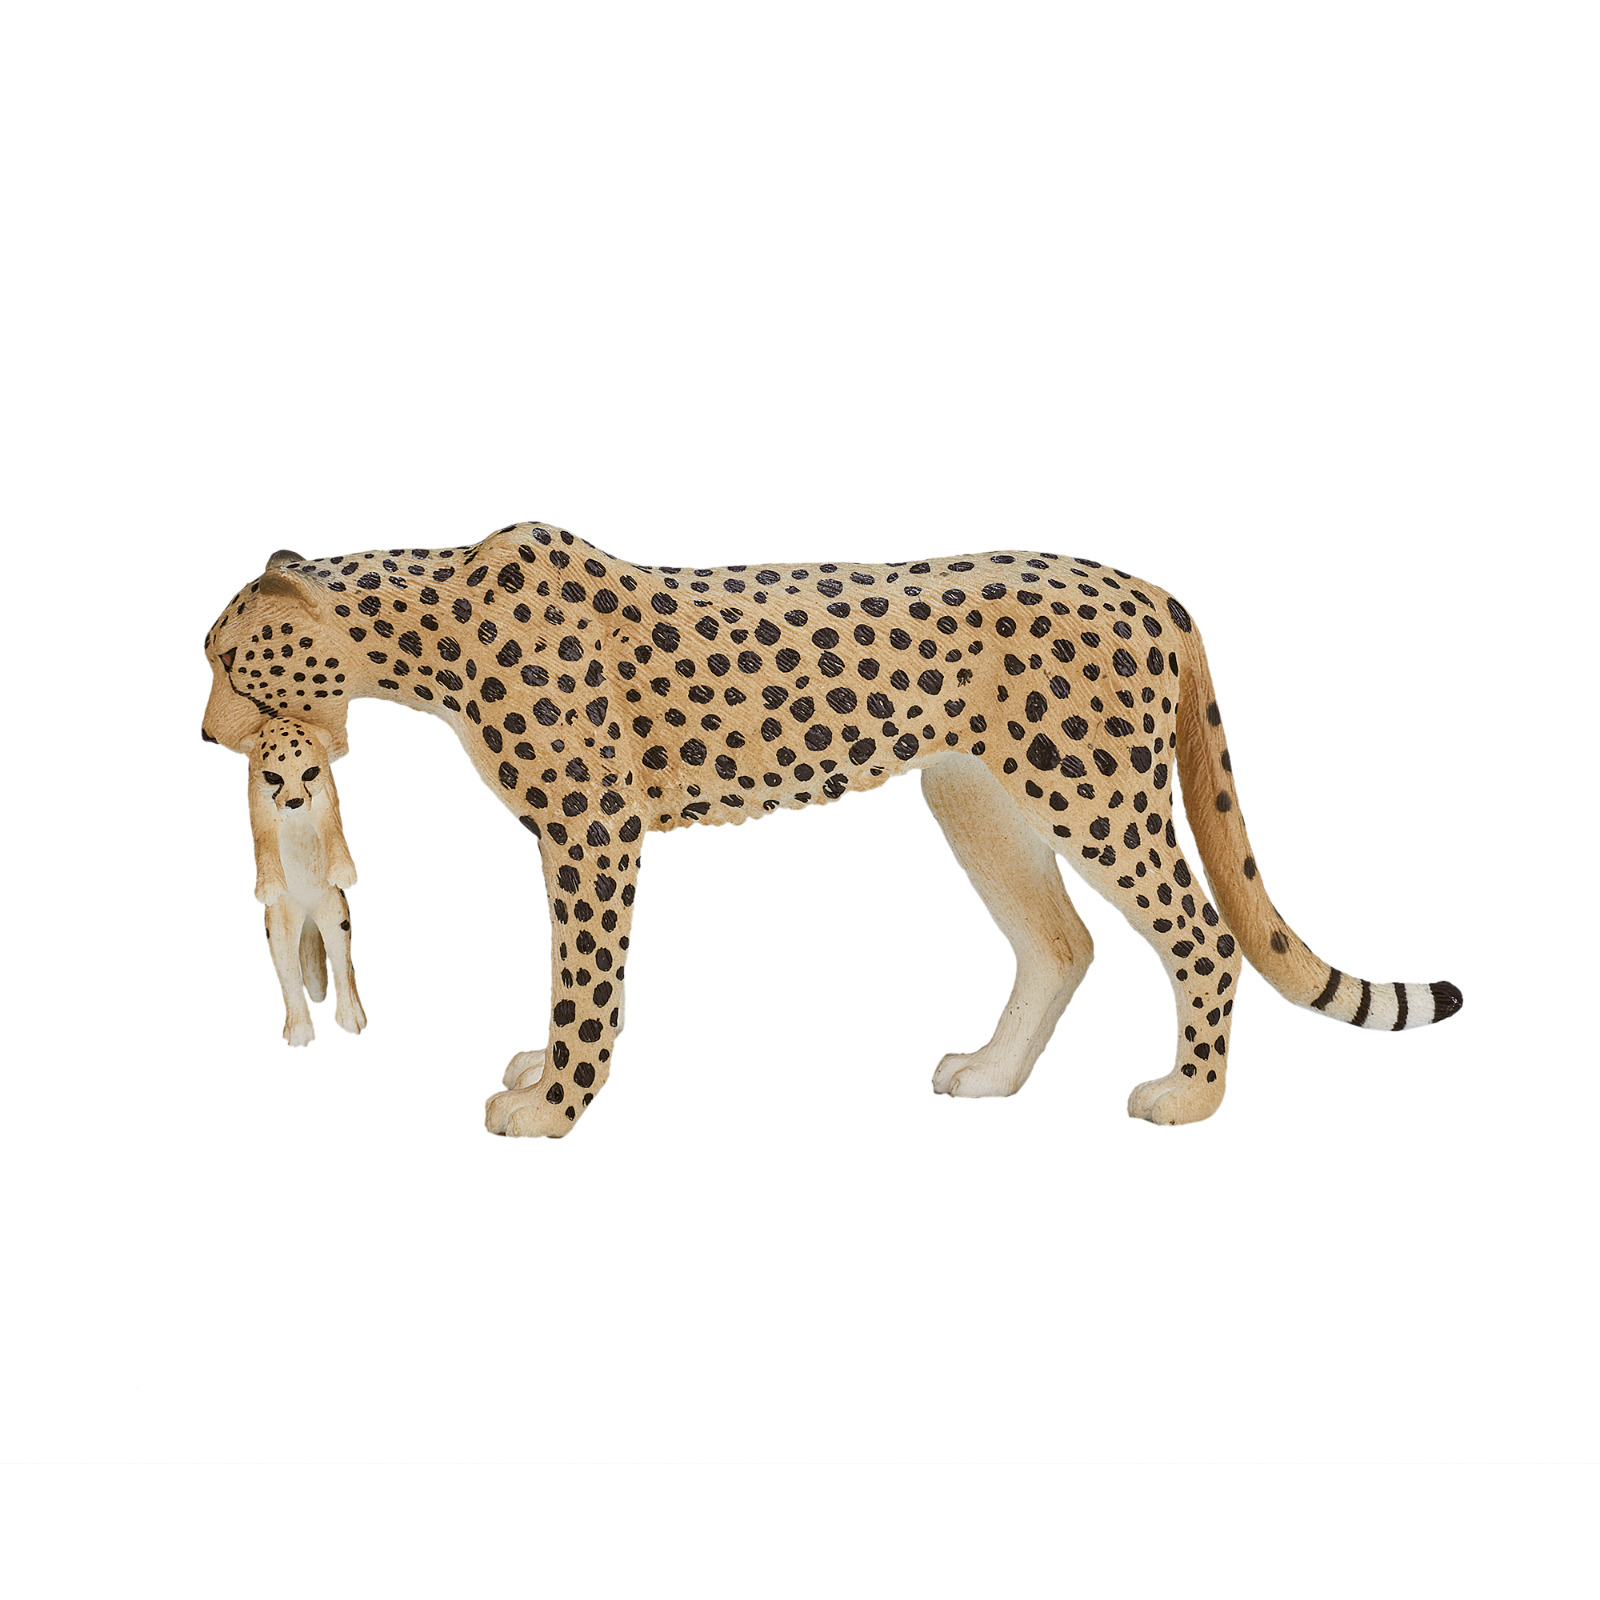 .Mojo CHEETAH & CUB Wild zoo animals play model figure toy plastic forest jungle